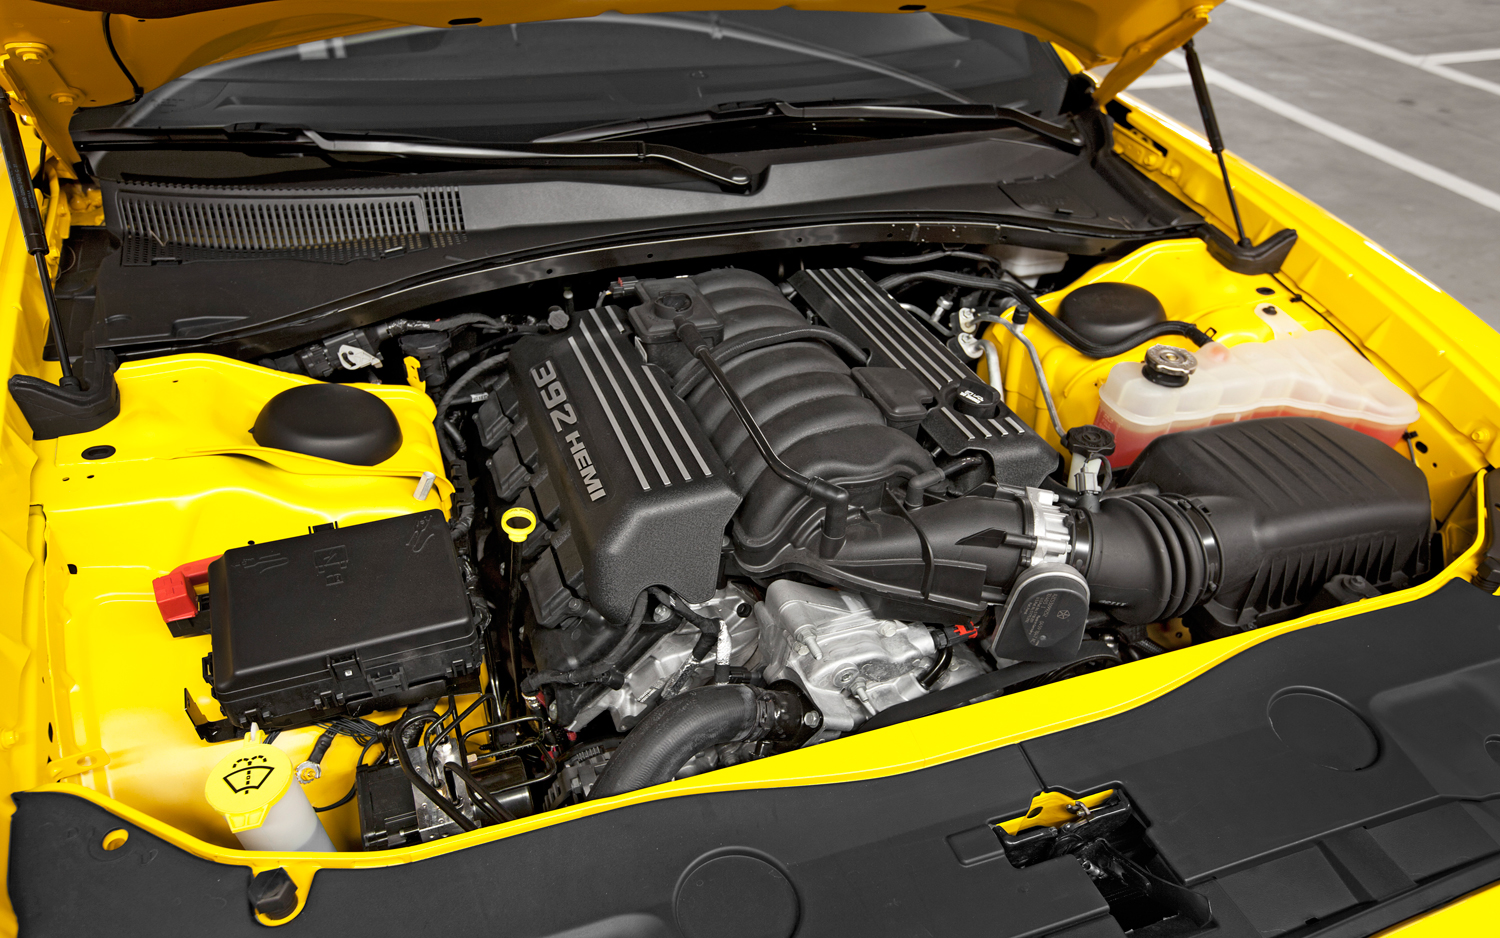 Dodge Charger SRT8 Superbee Backgrounds, Compatible - PC, Mobile, Gadgets| 1500x938 px